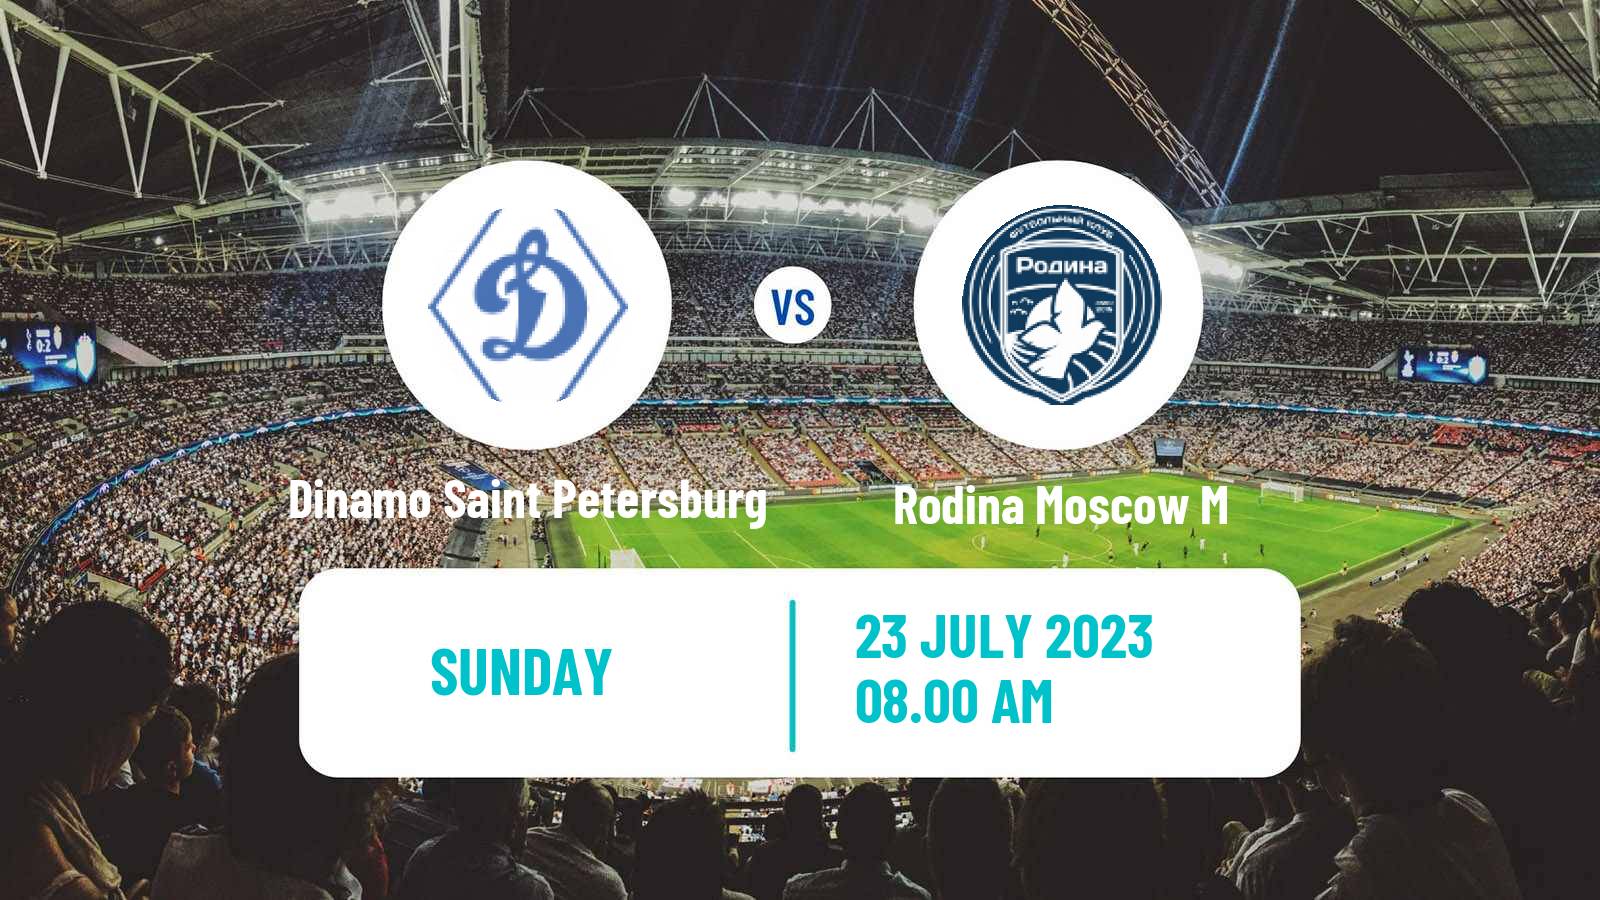 Soccer FNL 2 Division B Group 2 Dinamo Saint Petersburg - Rodina Moscow M